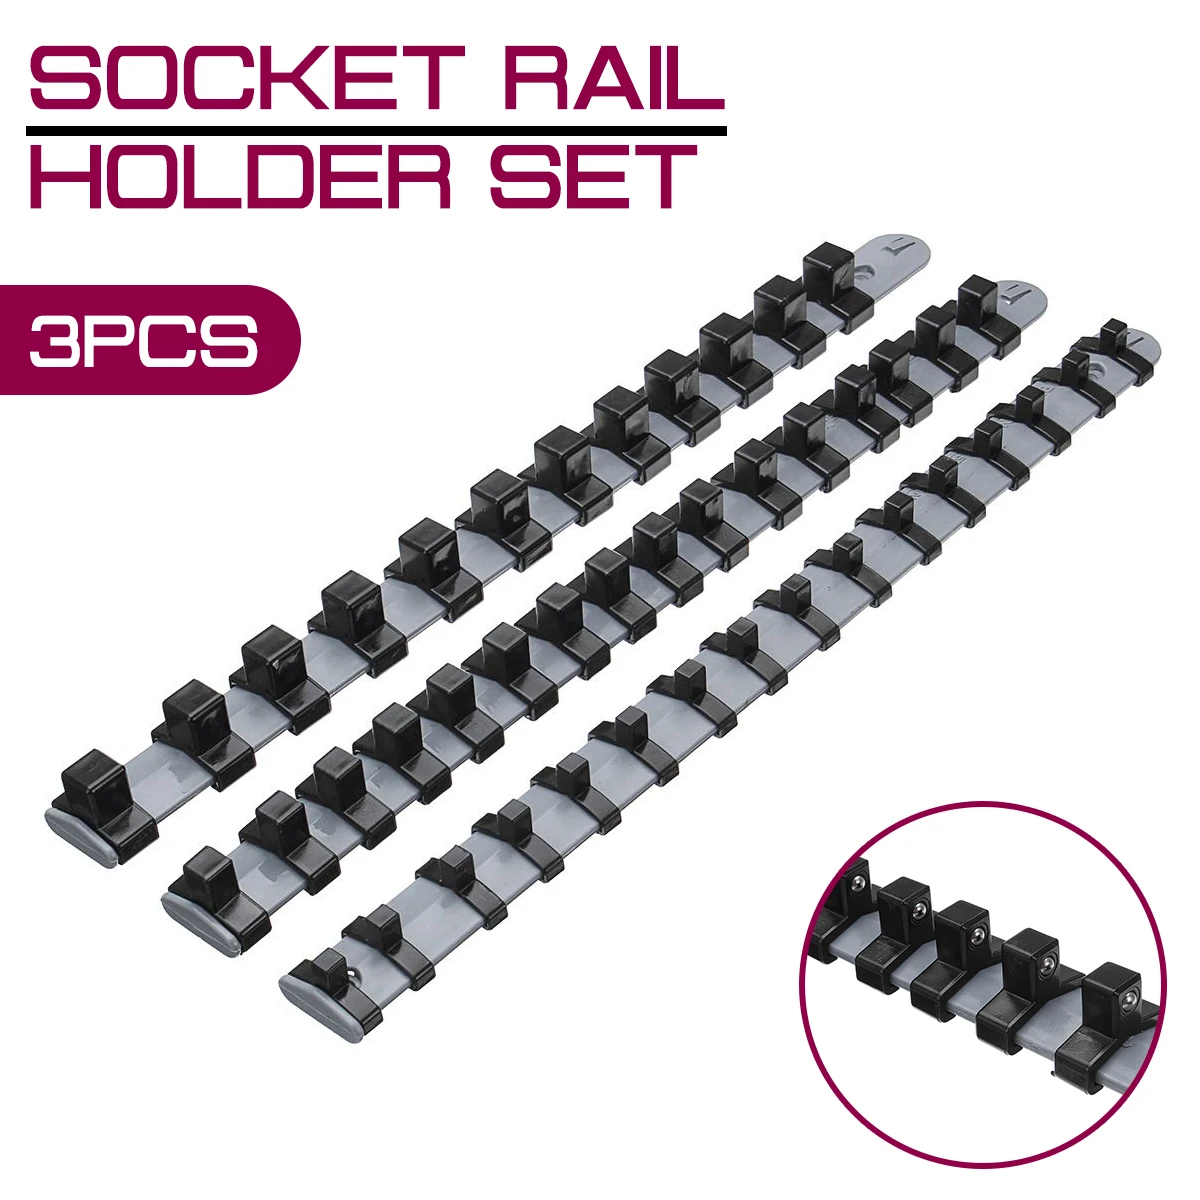 

3PCS/SET 1/4" 3/8" 1/2" Wall Wrench Organizer Socket Rack Storage Drive Rail Tray Holder Shelf Stand 34cm Socket Wrench